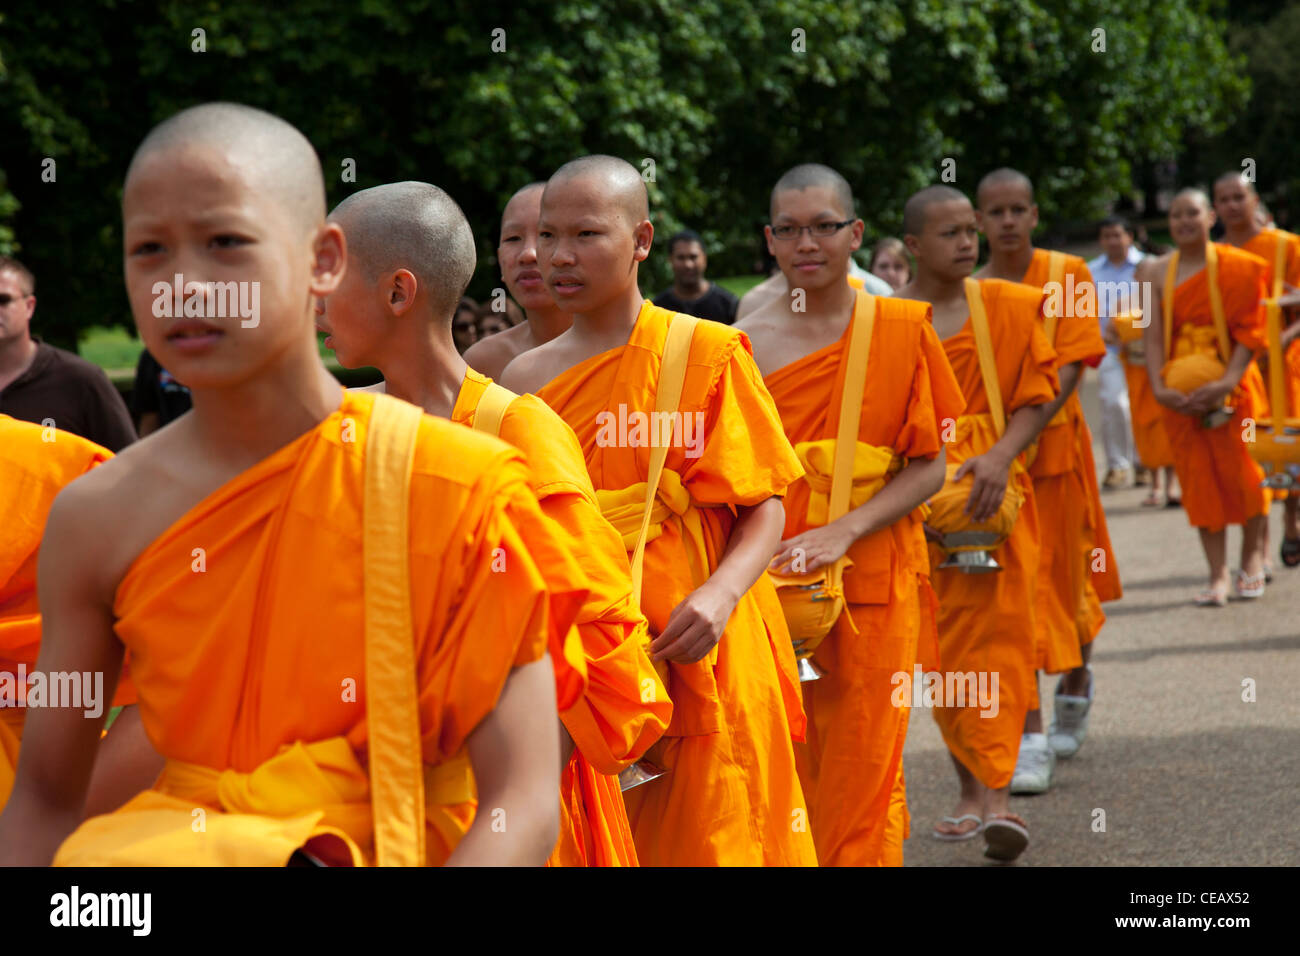 Young Tibetan Buddhist monks wearing orange robes walk through Green Park,  London, UK Stock Photo - Alamy